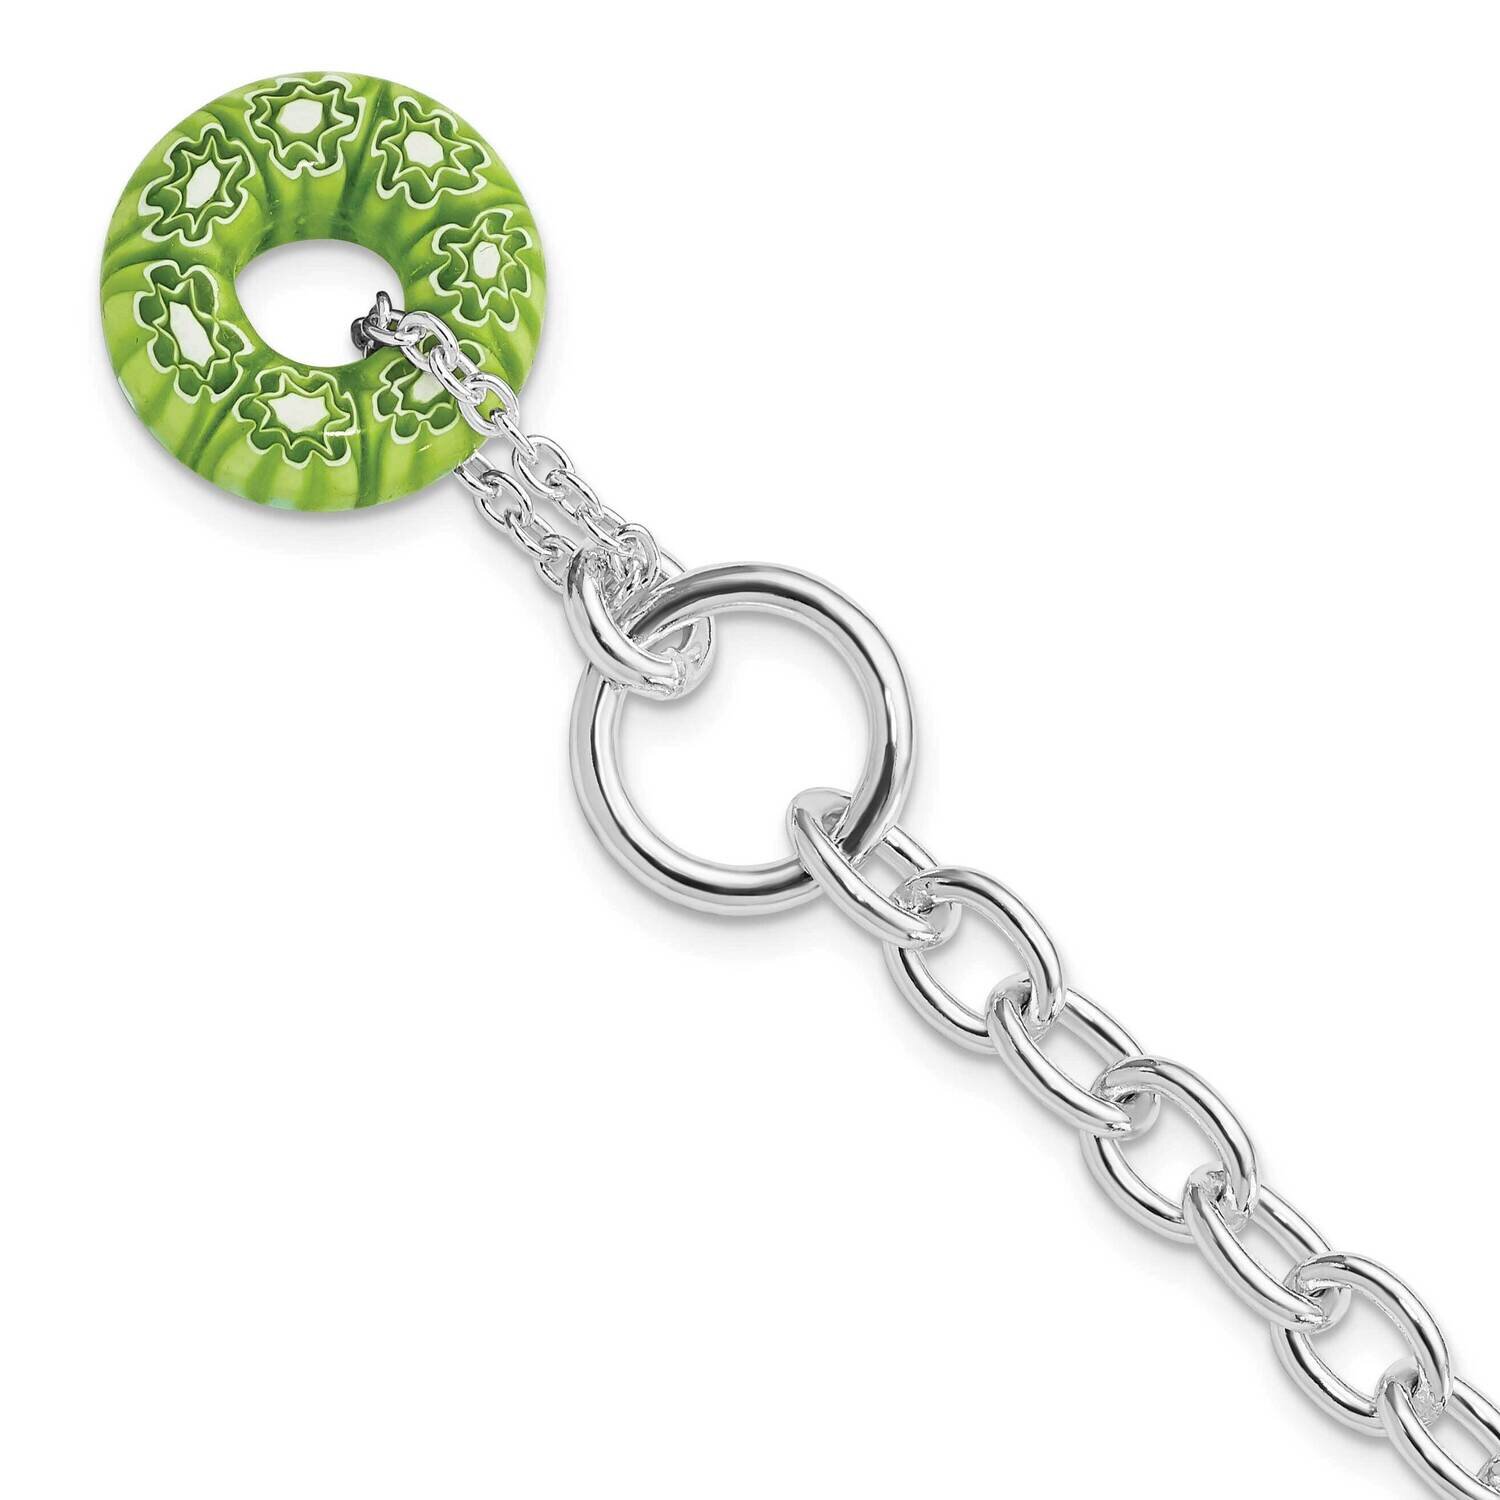 Green Flower Design Bead Charm Bracelet Sterling Silver QG1495-7.5